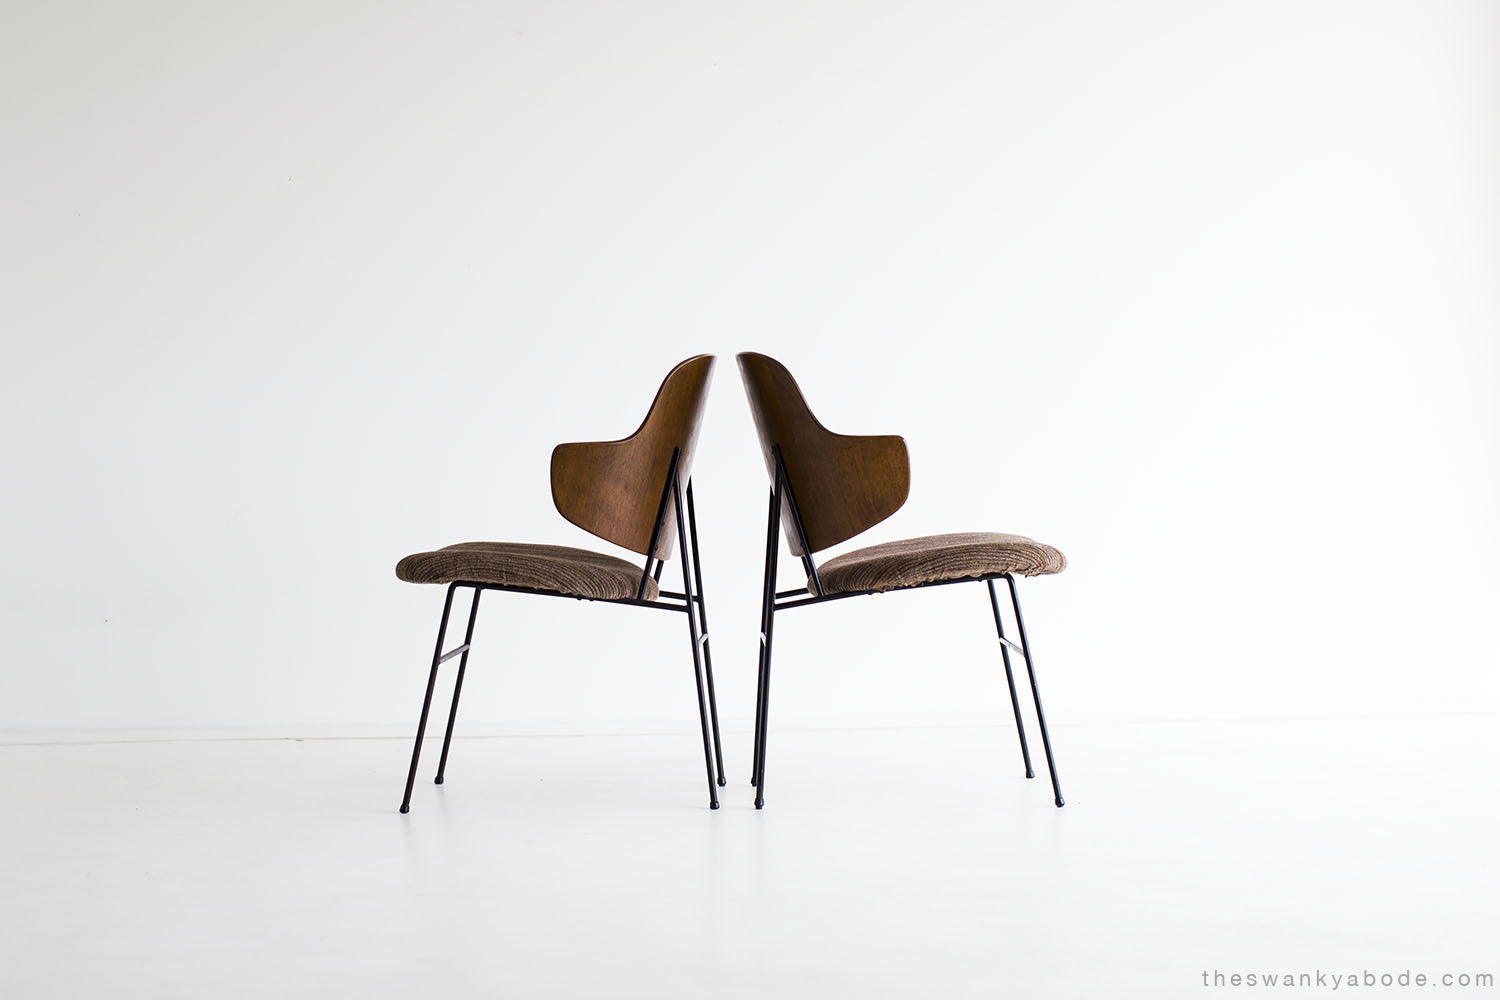 Kofod-Larsen Penguin Chairs - 01181603